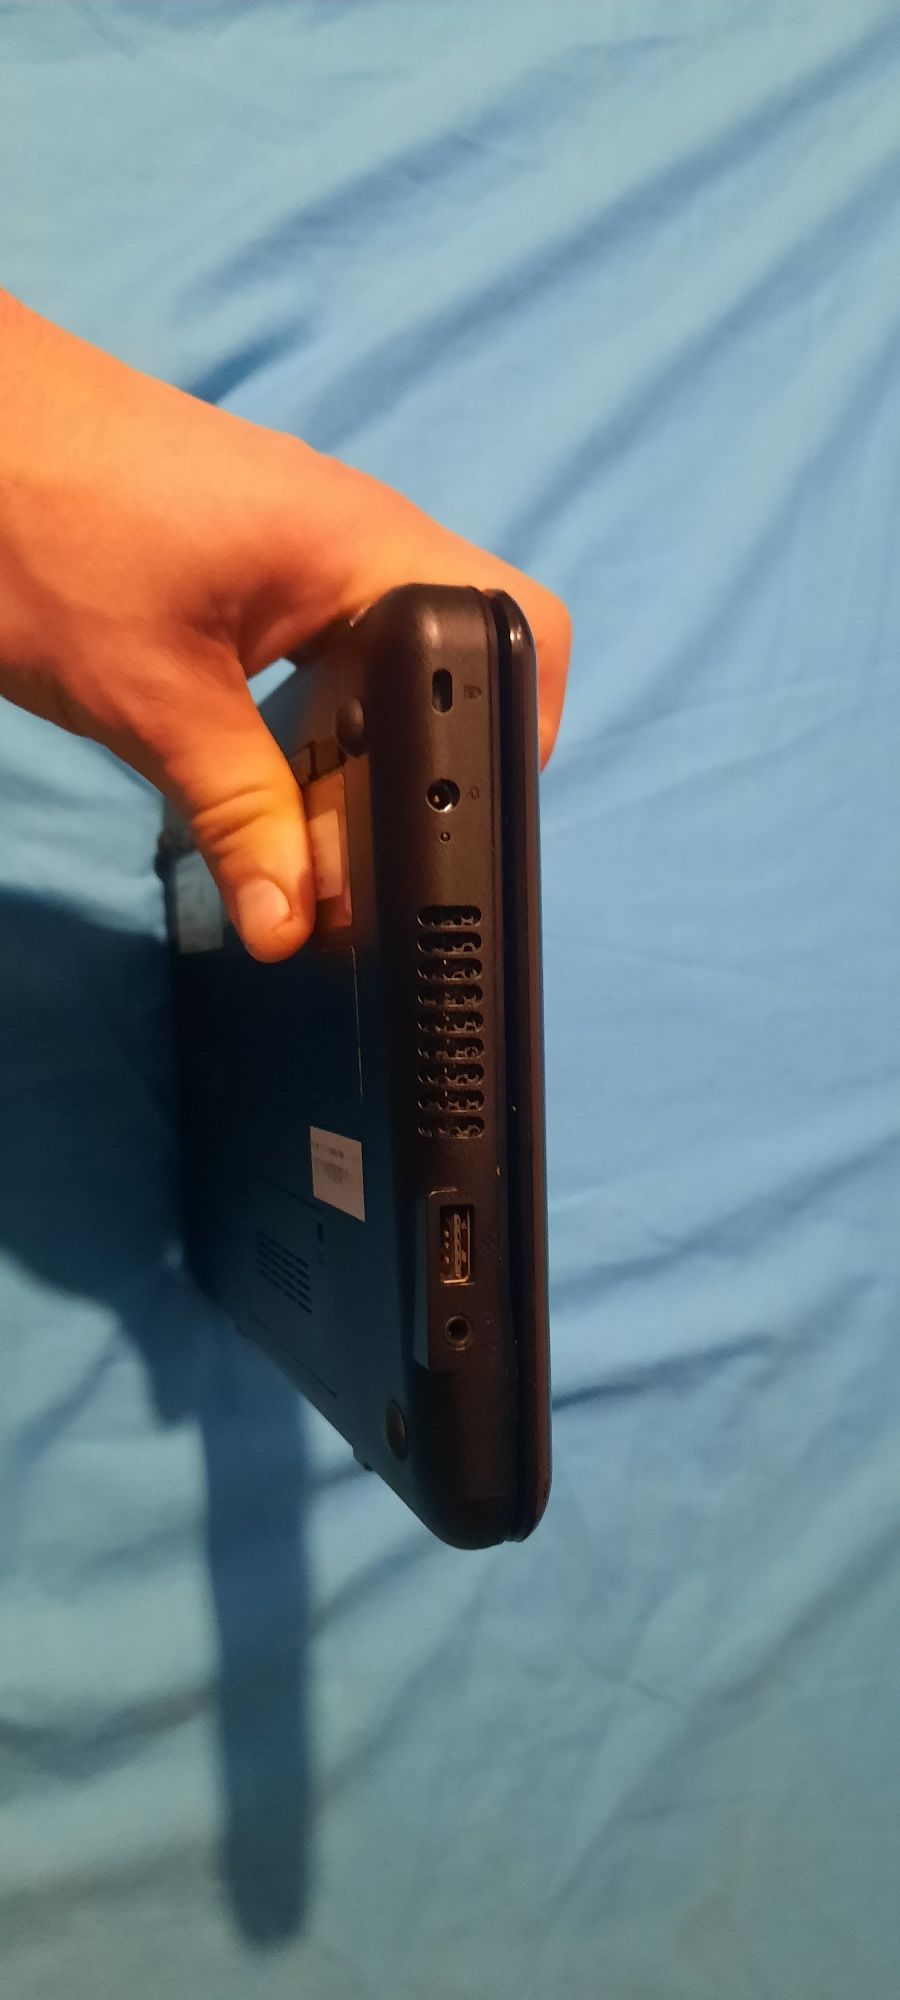 Нетбук HP Compag mini SSD 160